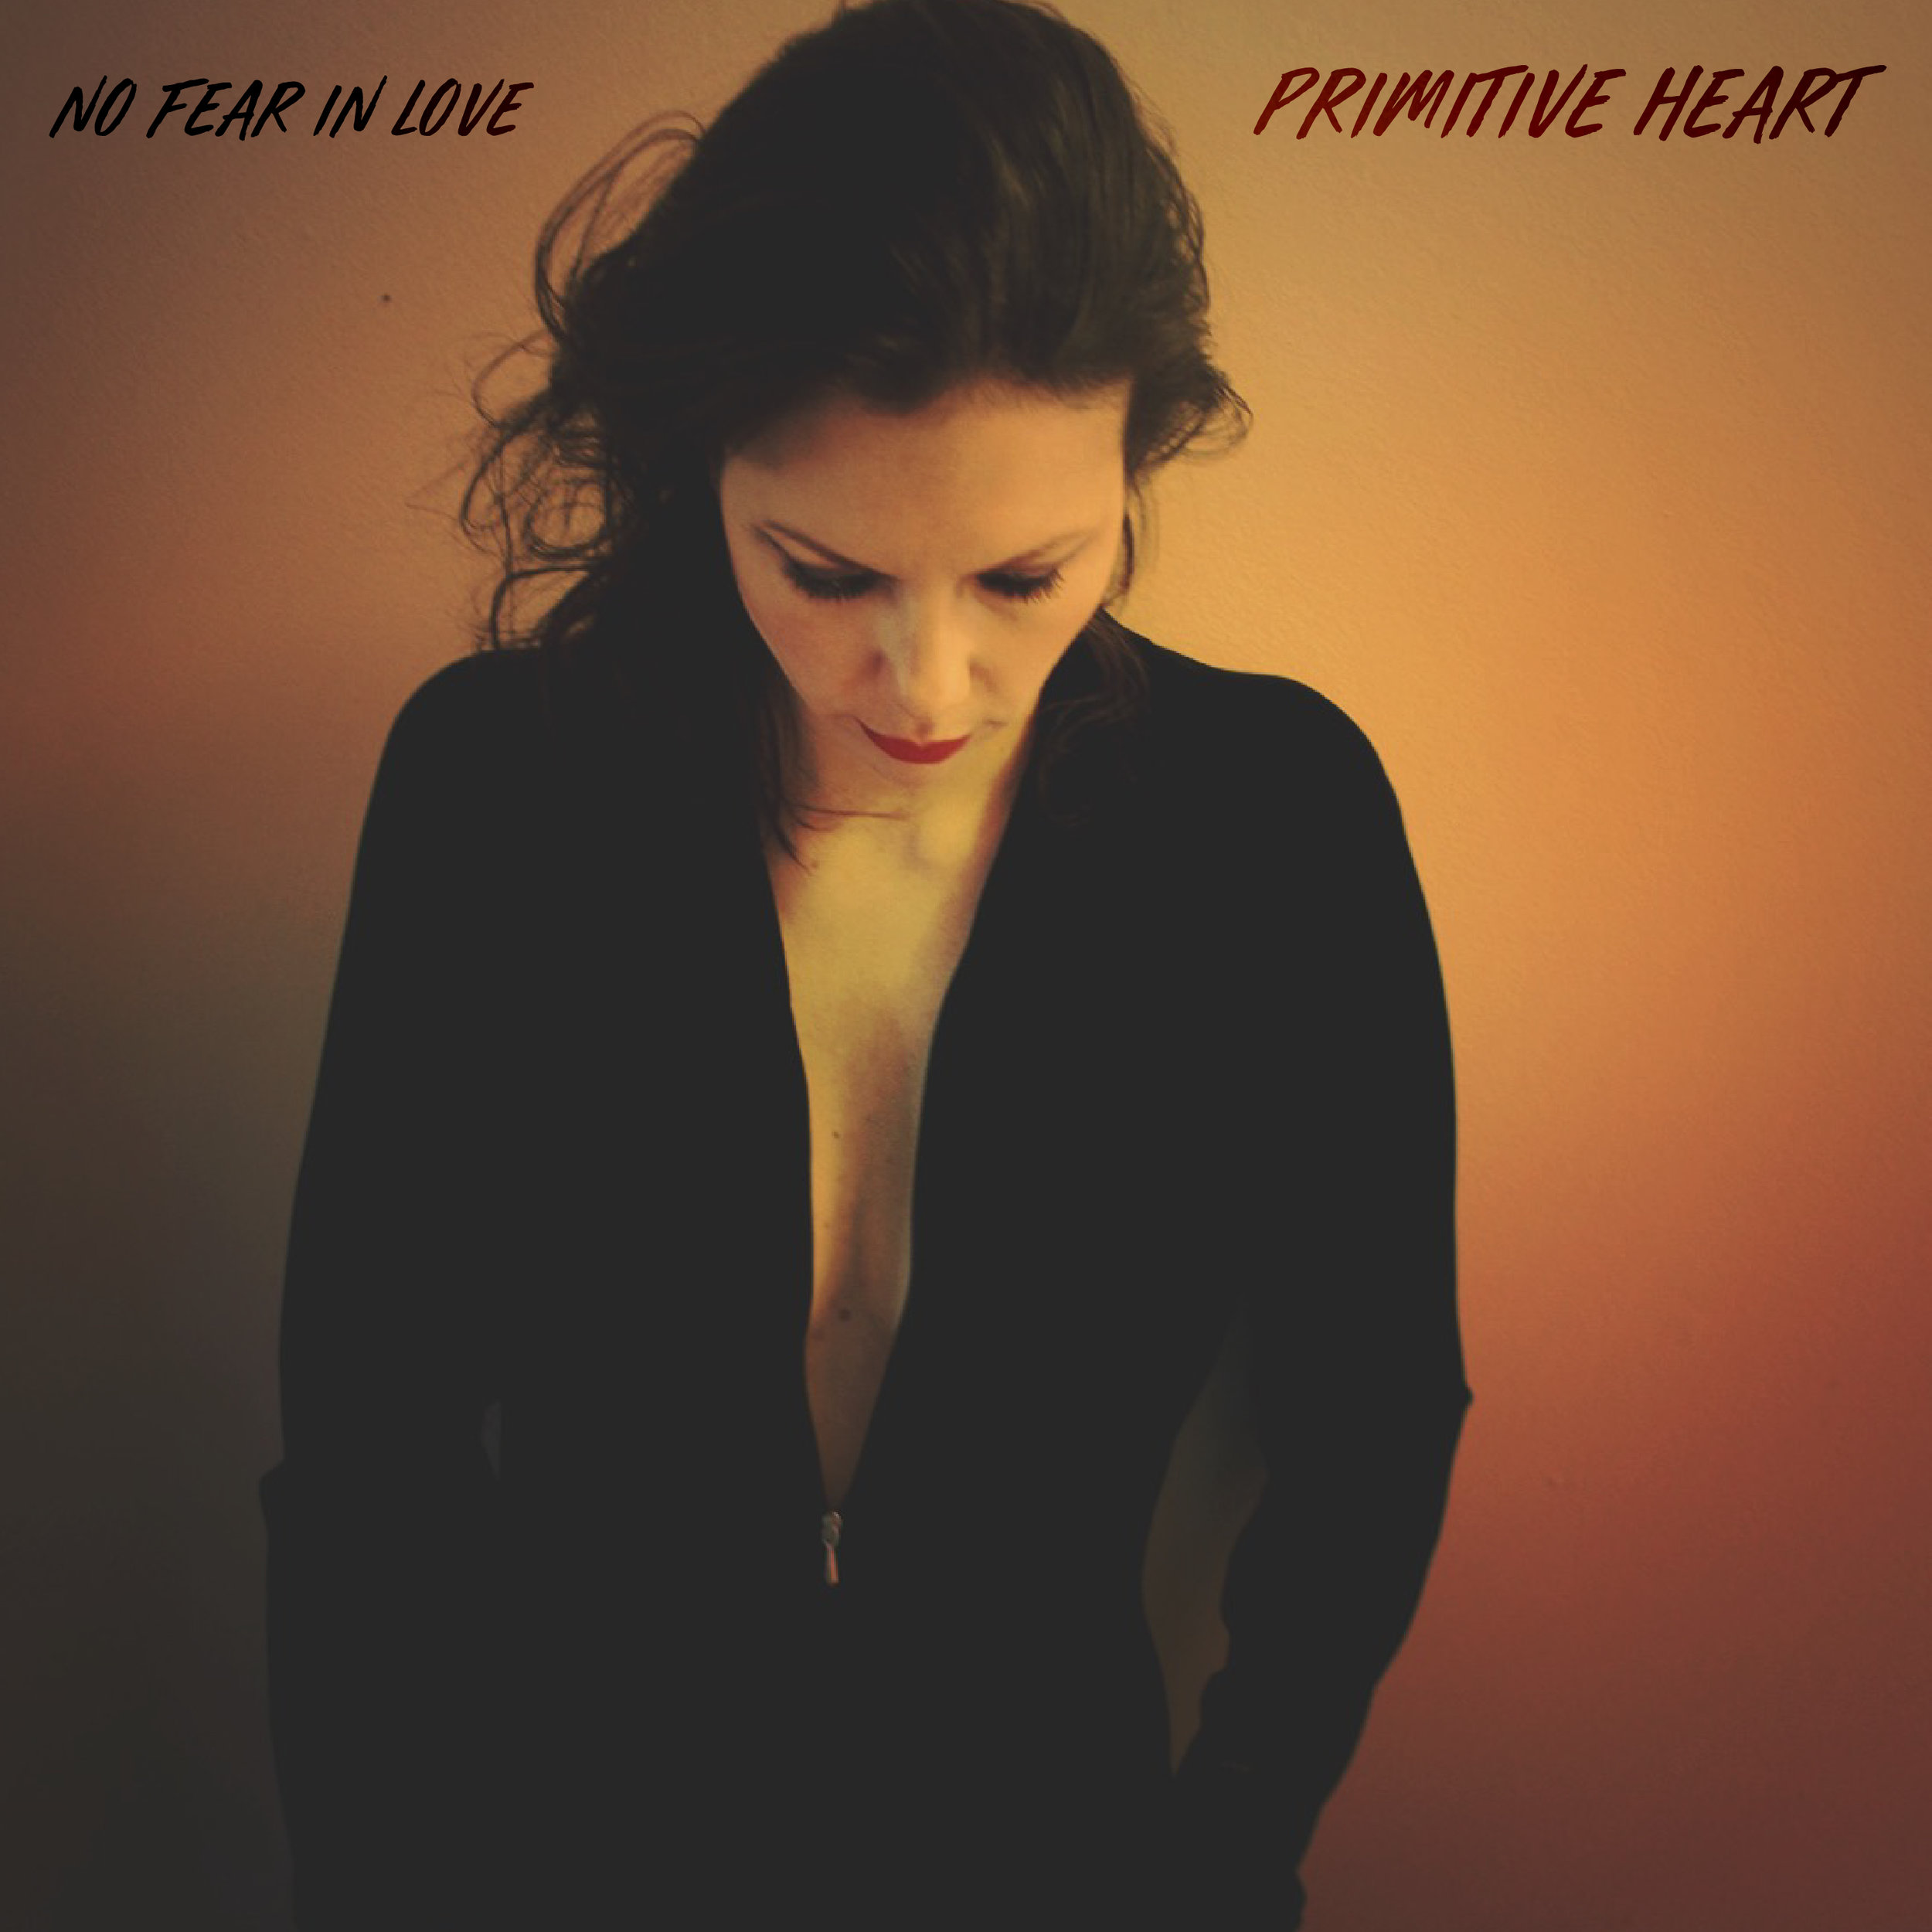 Primitive Heart - No Fear In Love Album Cover.jpg